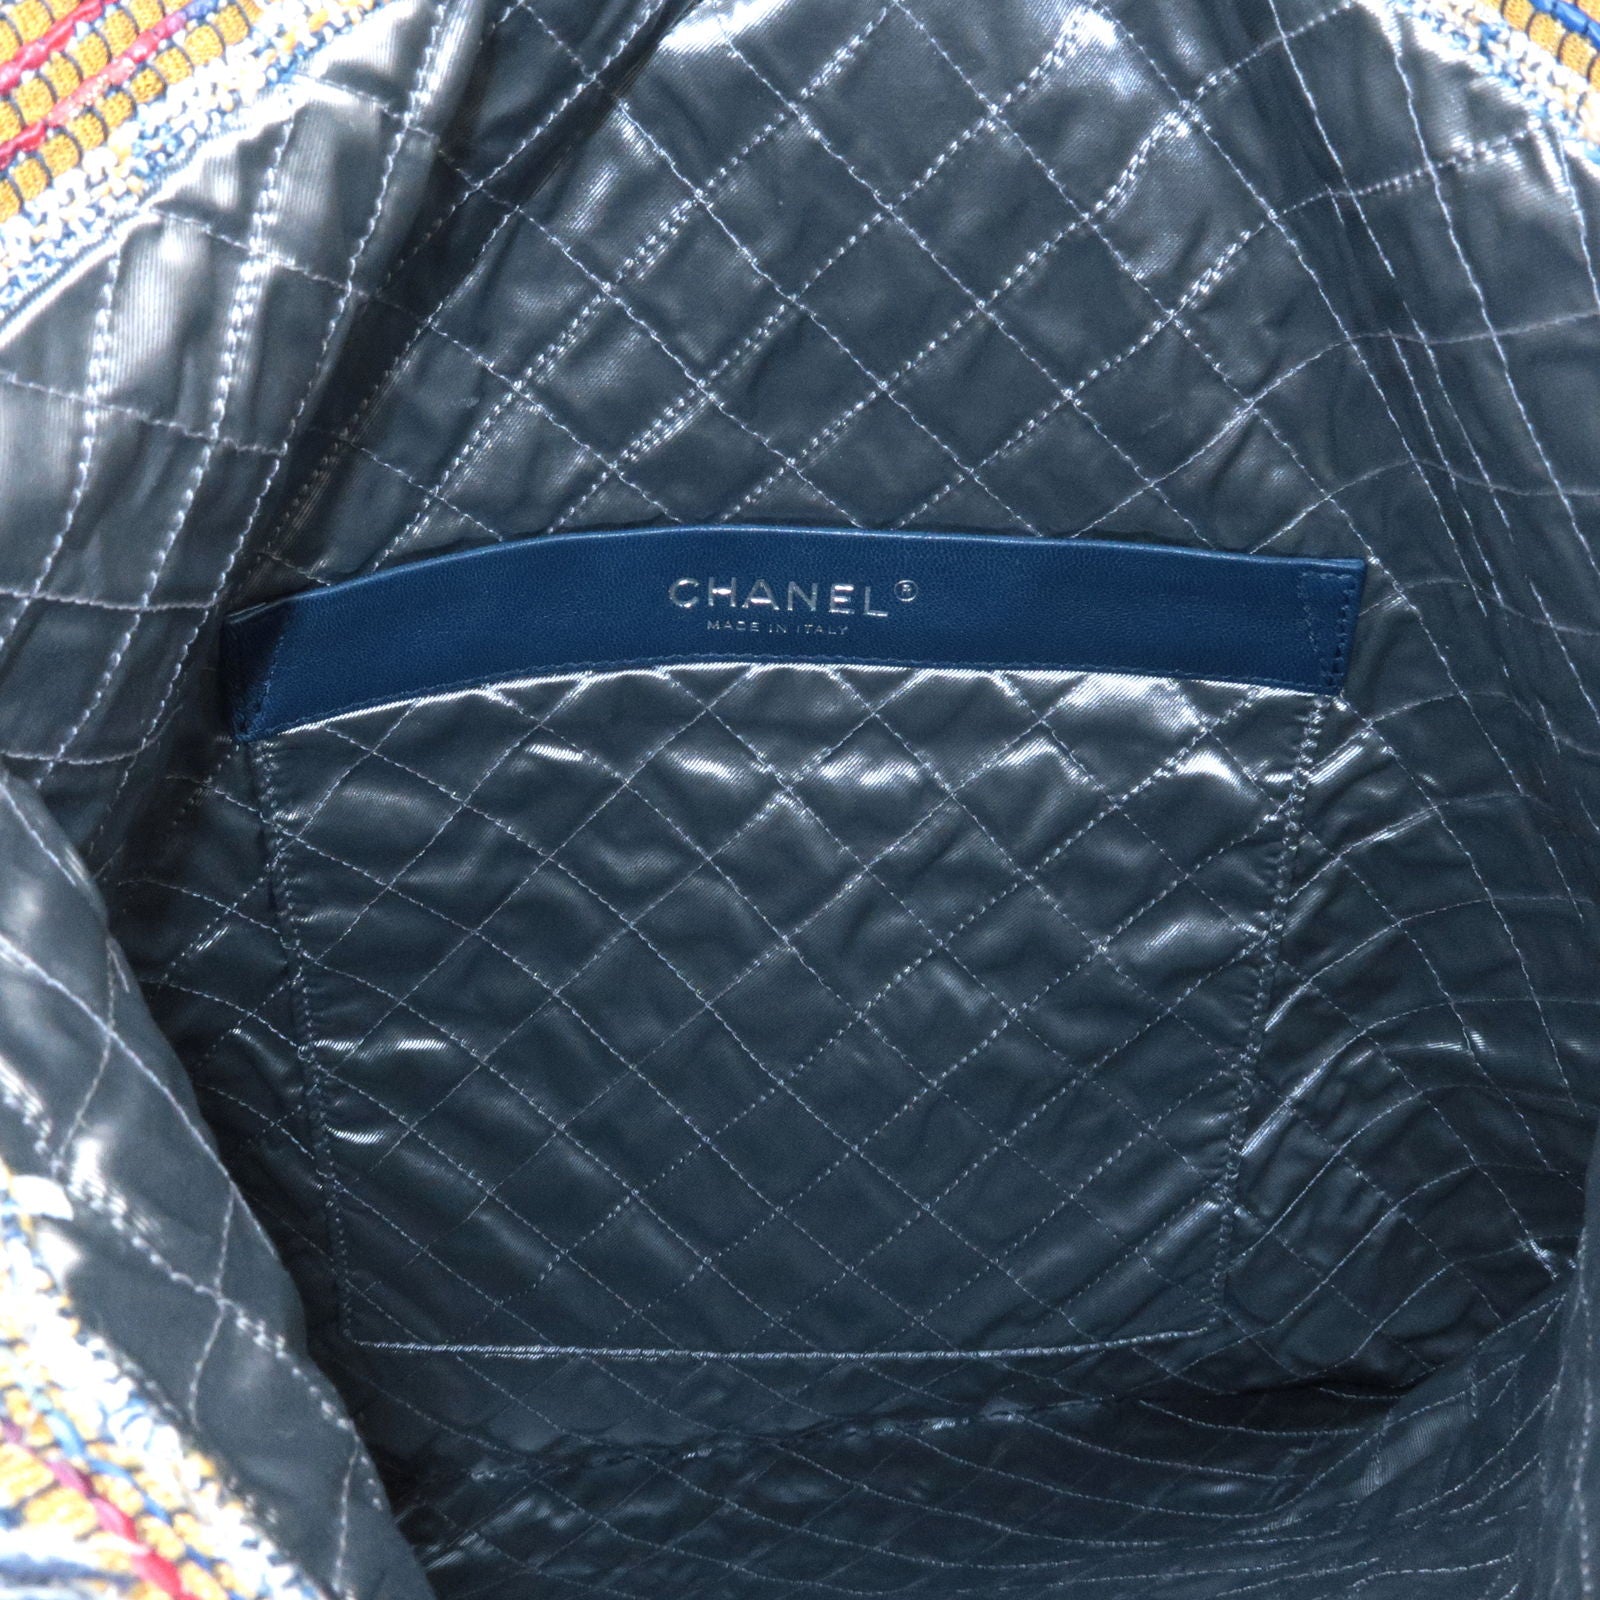 Chanel Gray Quilted Calfskin Medium Boy Bag 